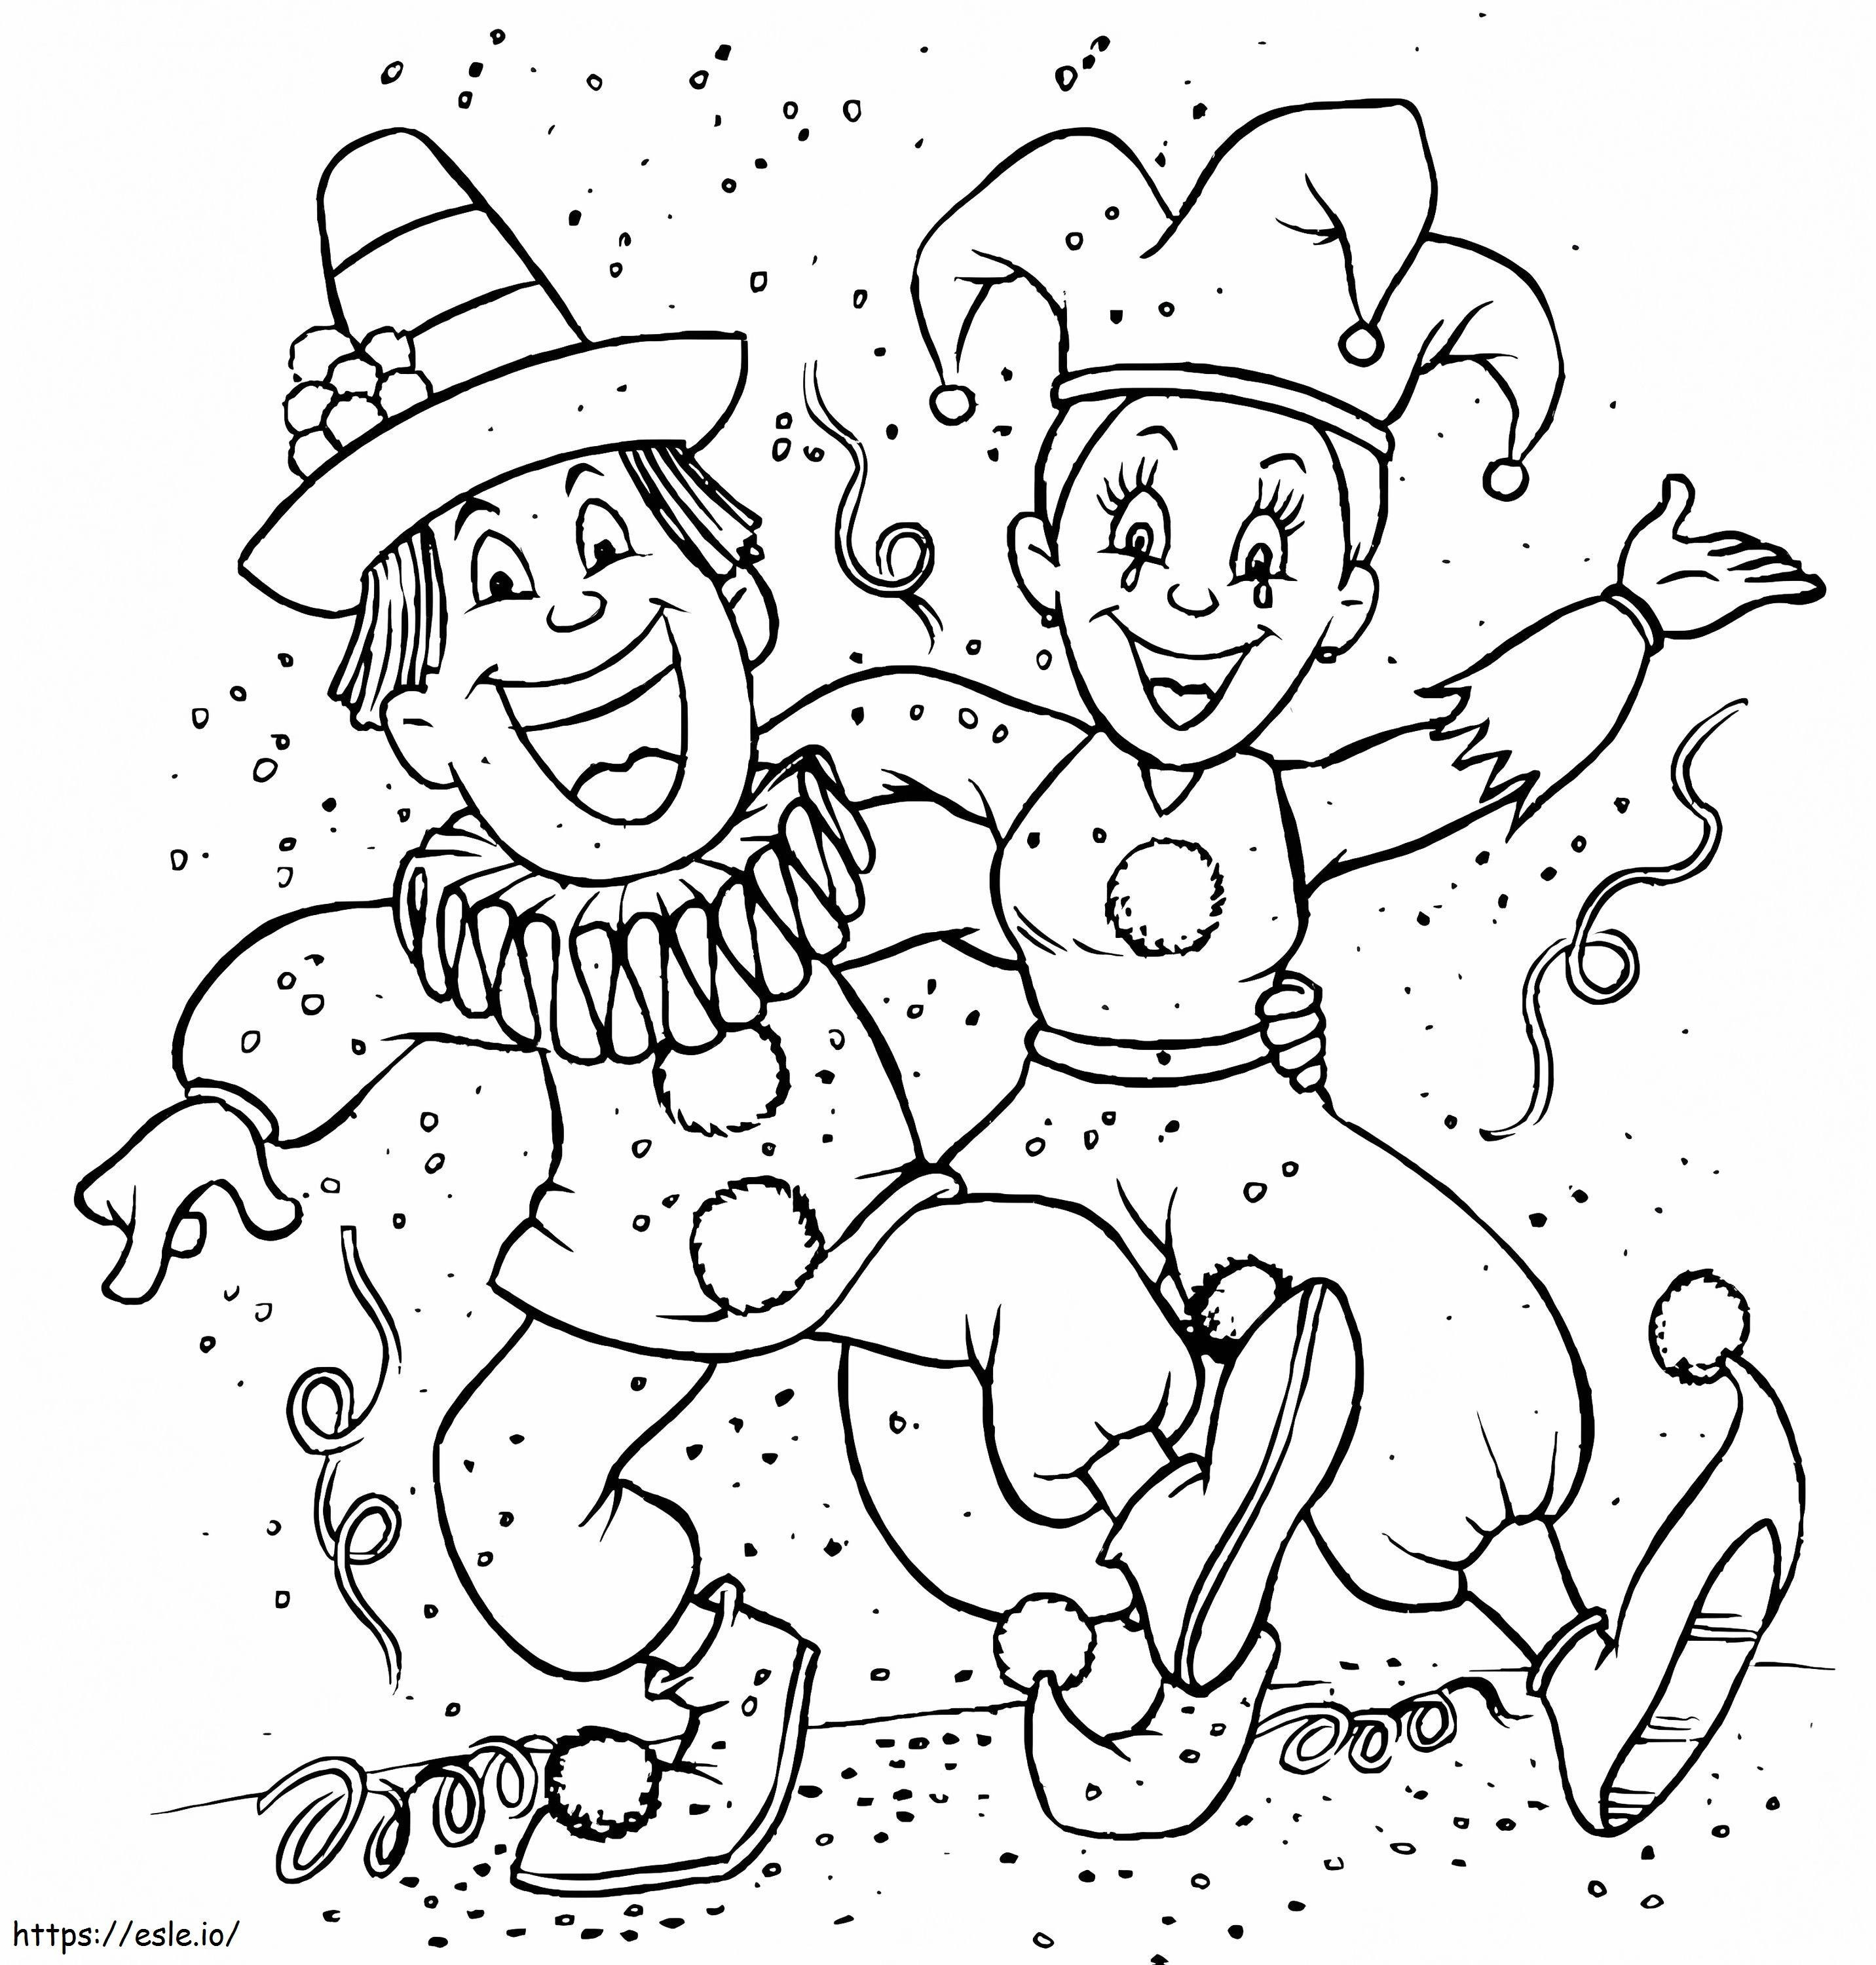 Carnival Joy coloring page